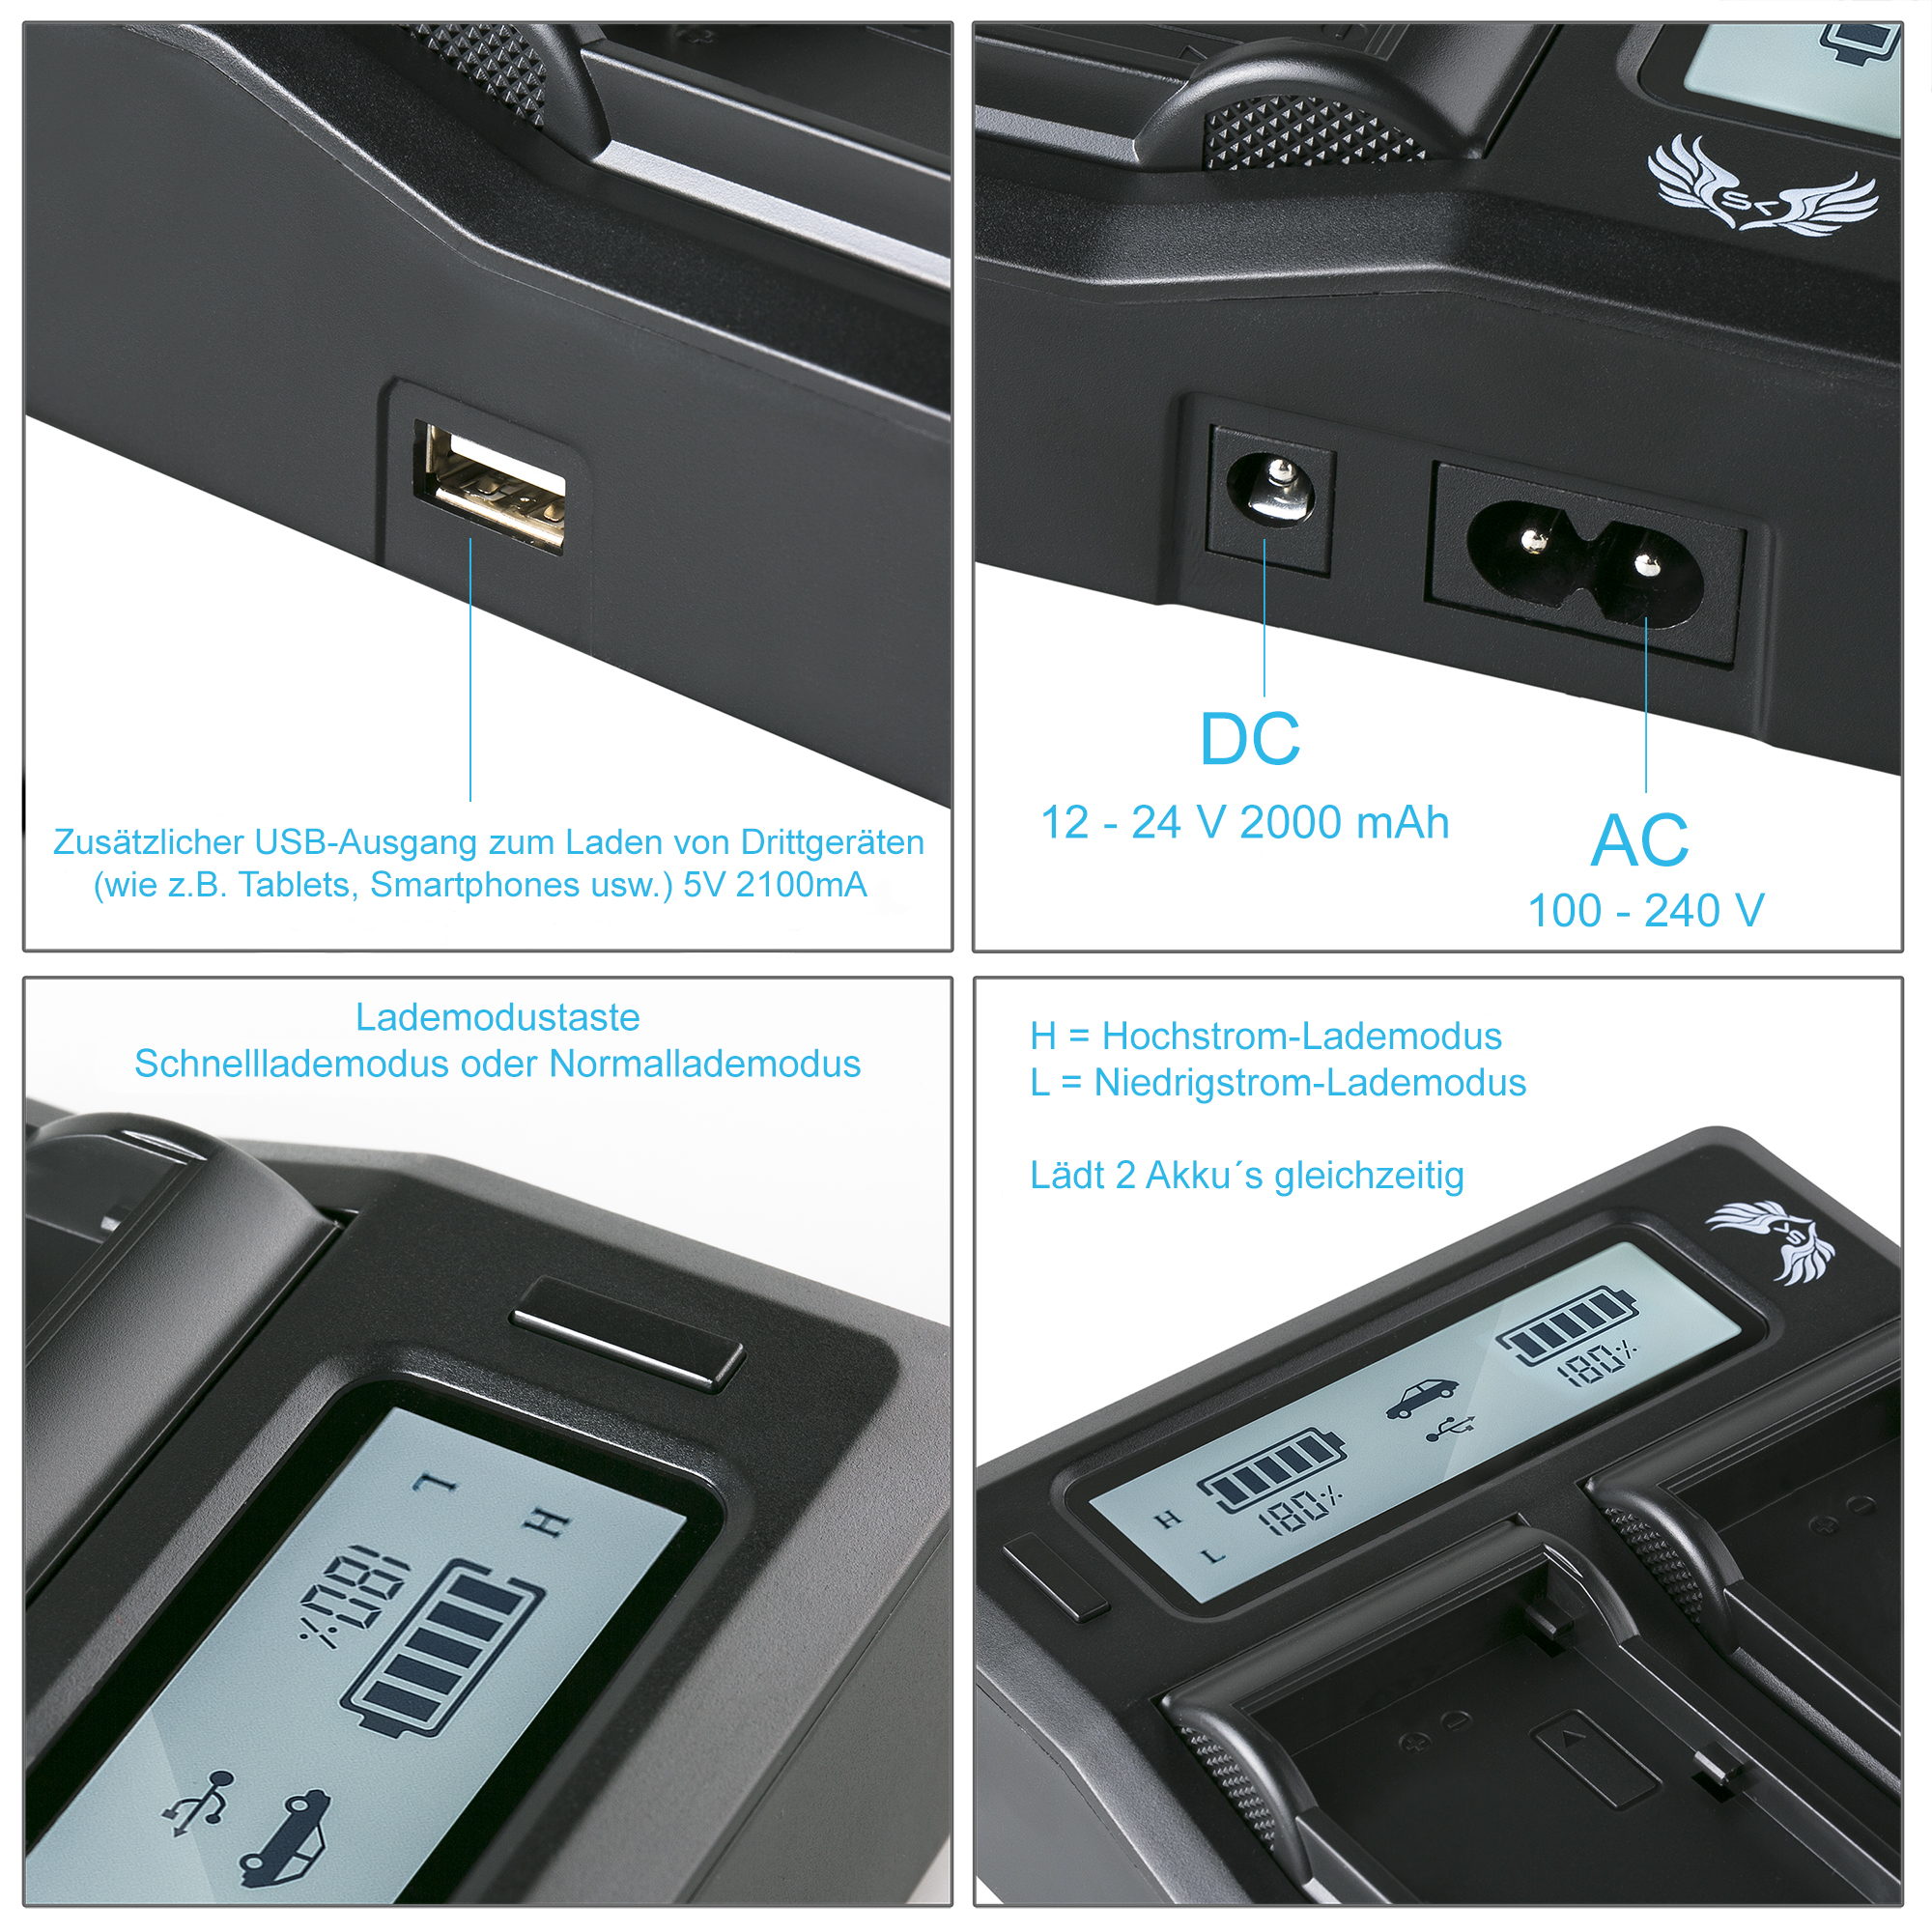 Sony 2250mAh Charger, Passend FX30 Akku / NP-FZ100 / 2x A9 II für + SKGAMES / Alpha Akku Li-ion A1 Charger 7C 9 A9S + / / 2250mAh Dual